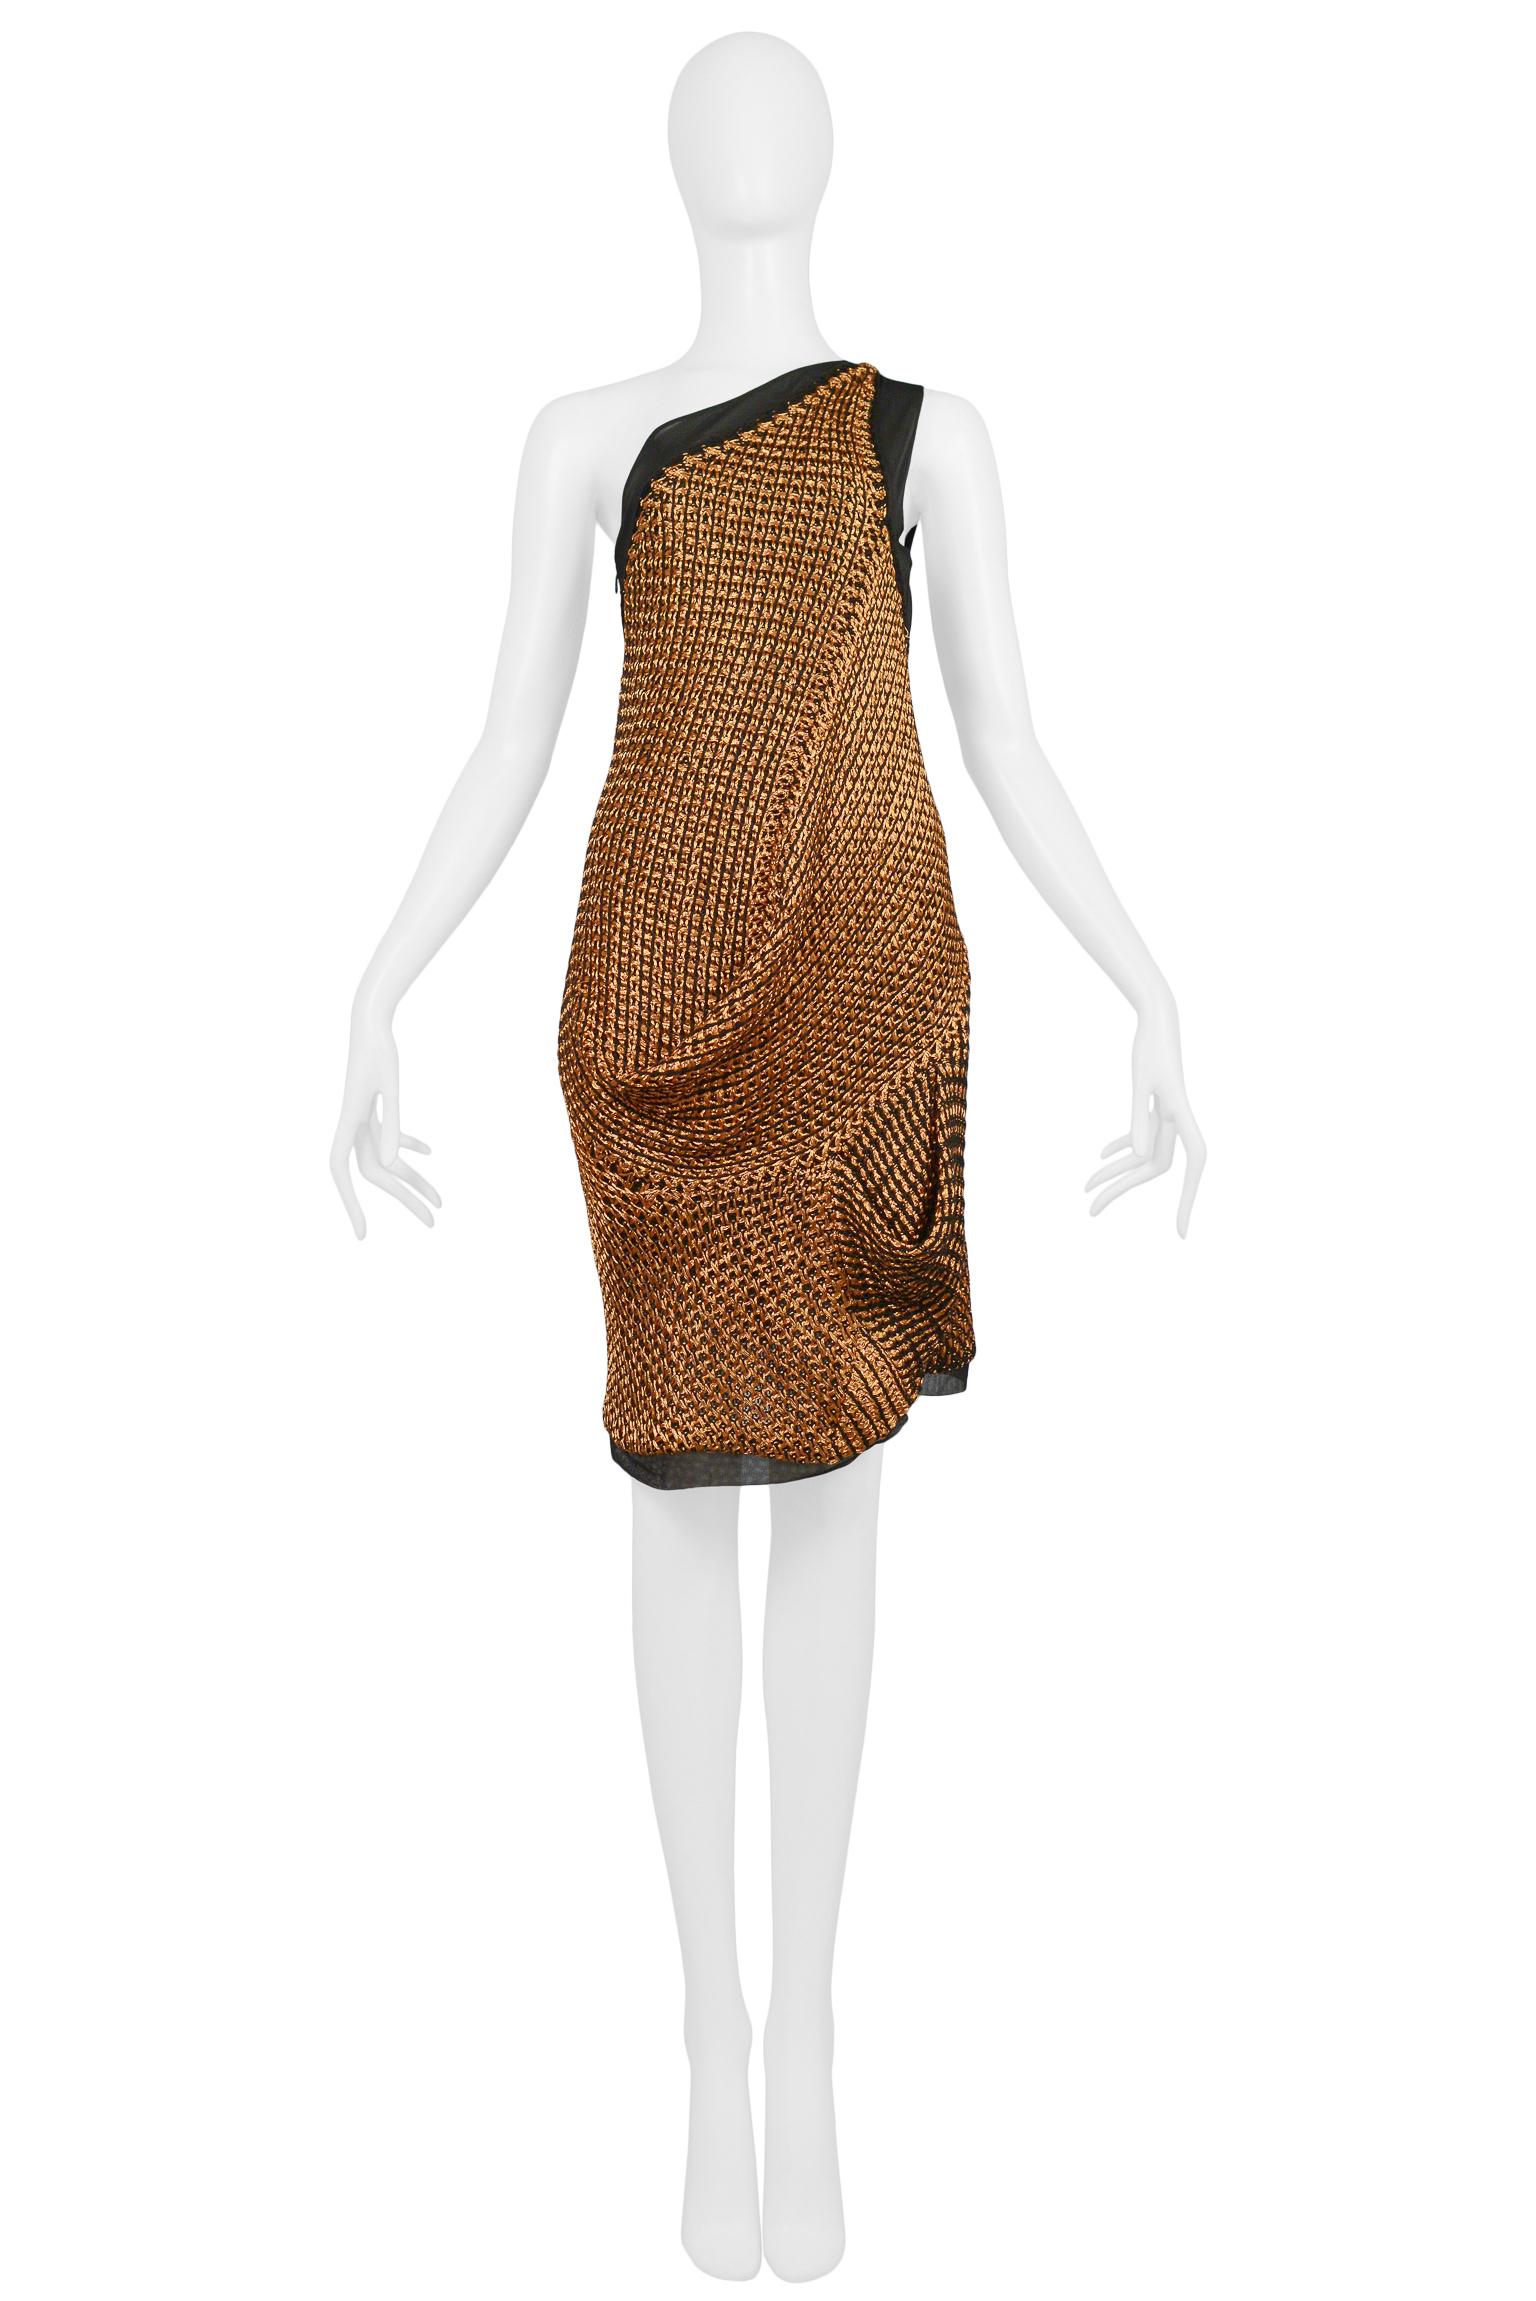 Balenciaga By Nicolas Ghesquiere Copper Wire Crochet Dress 2007 In Excellent Condition For Sale In Los Angeles, CA